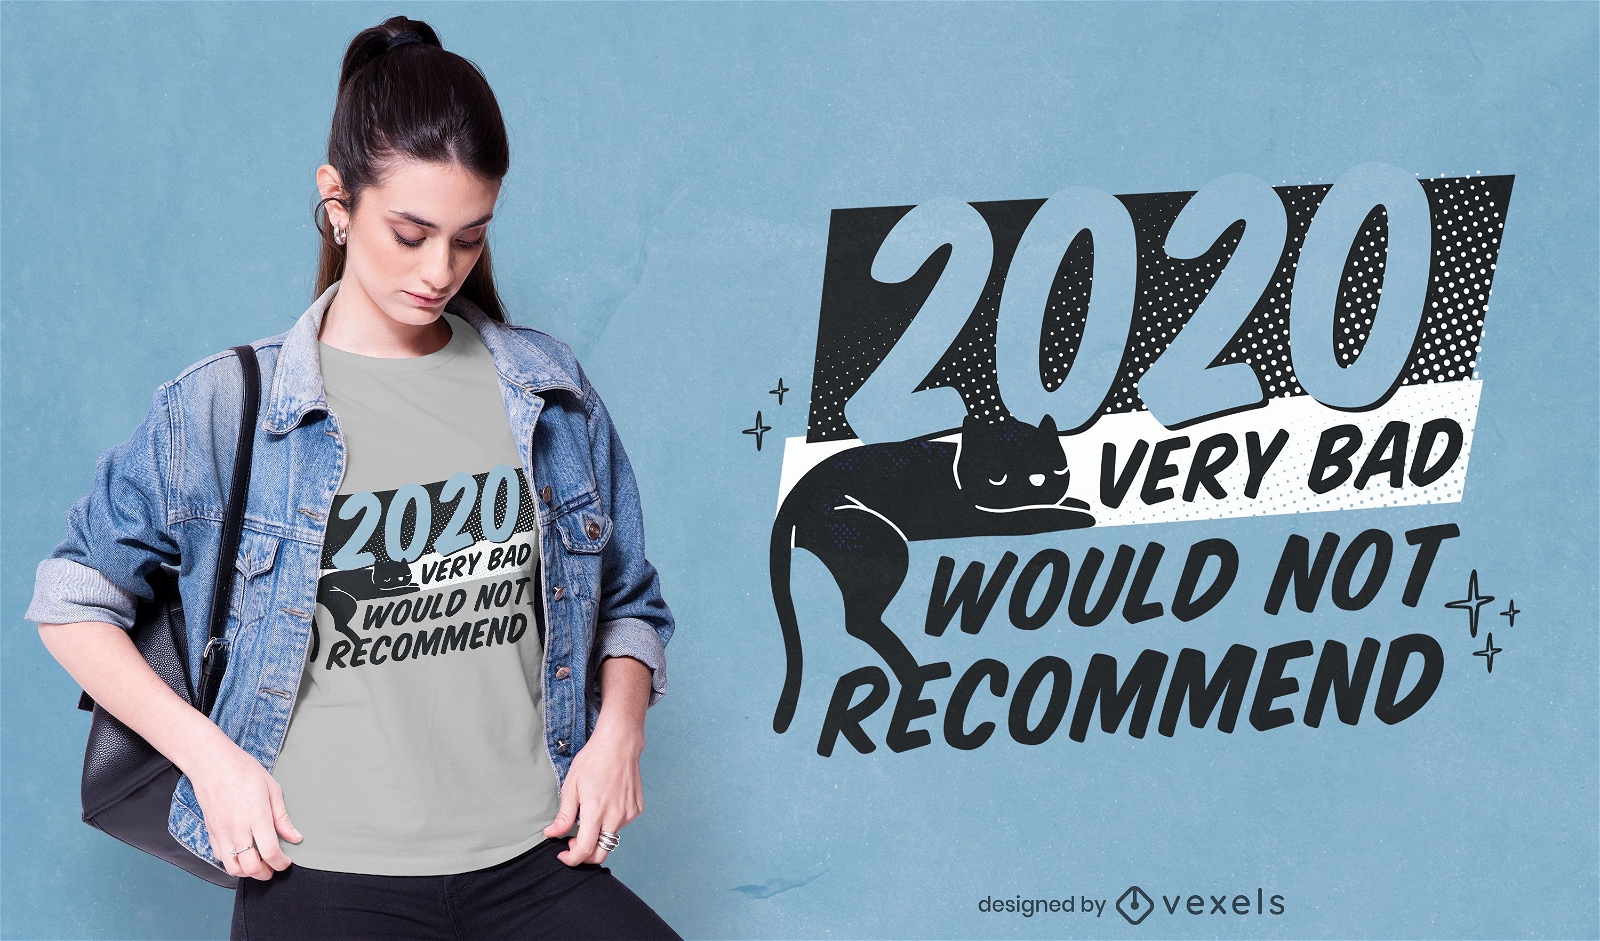 2020 very bad t-shirt design